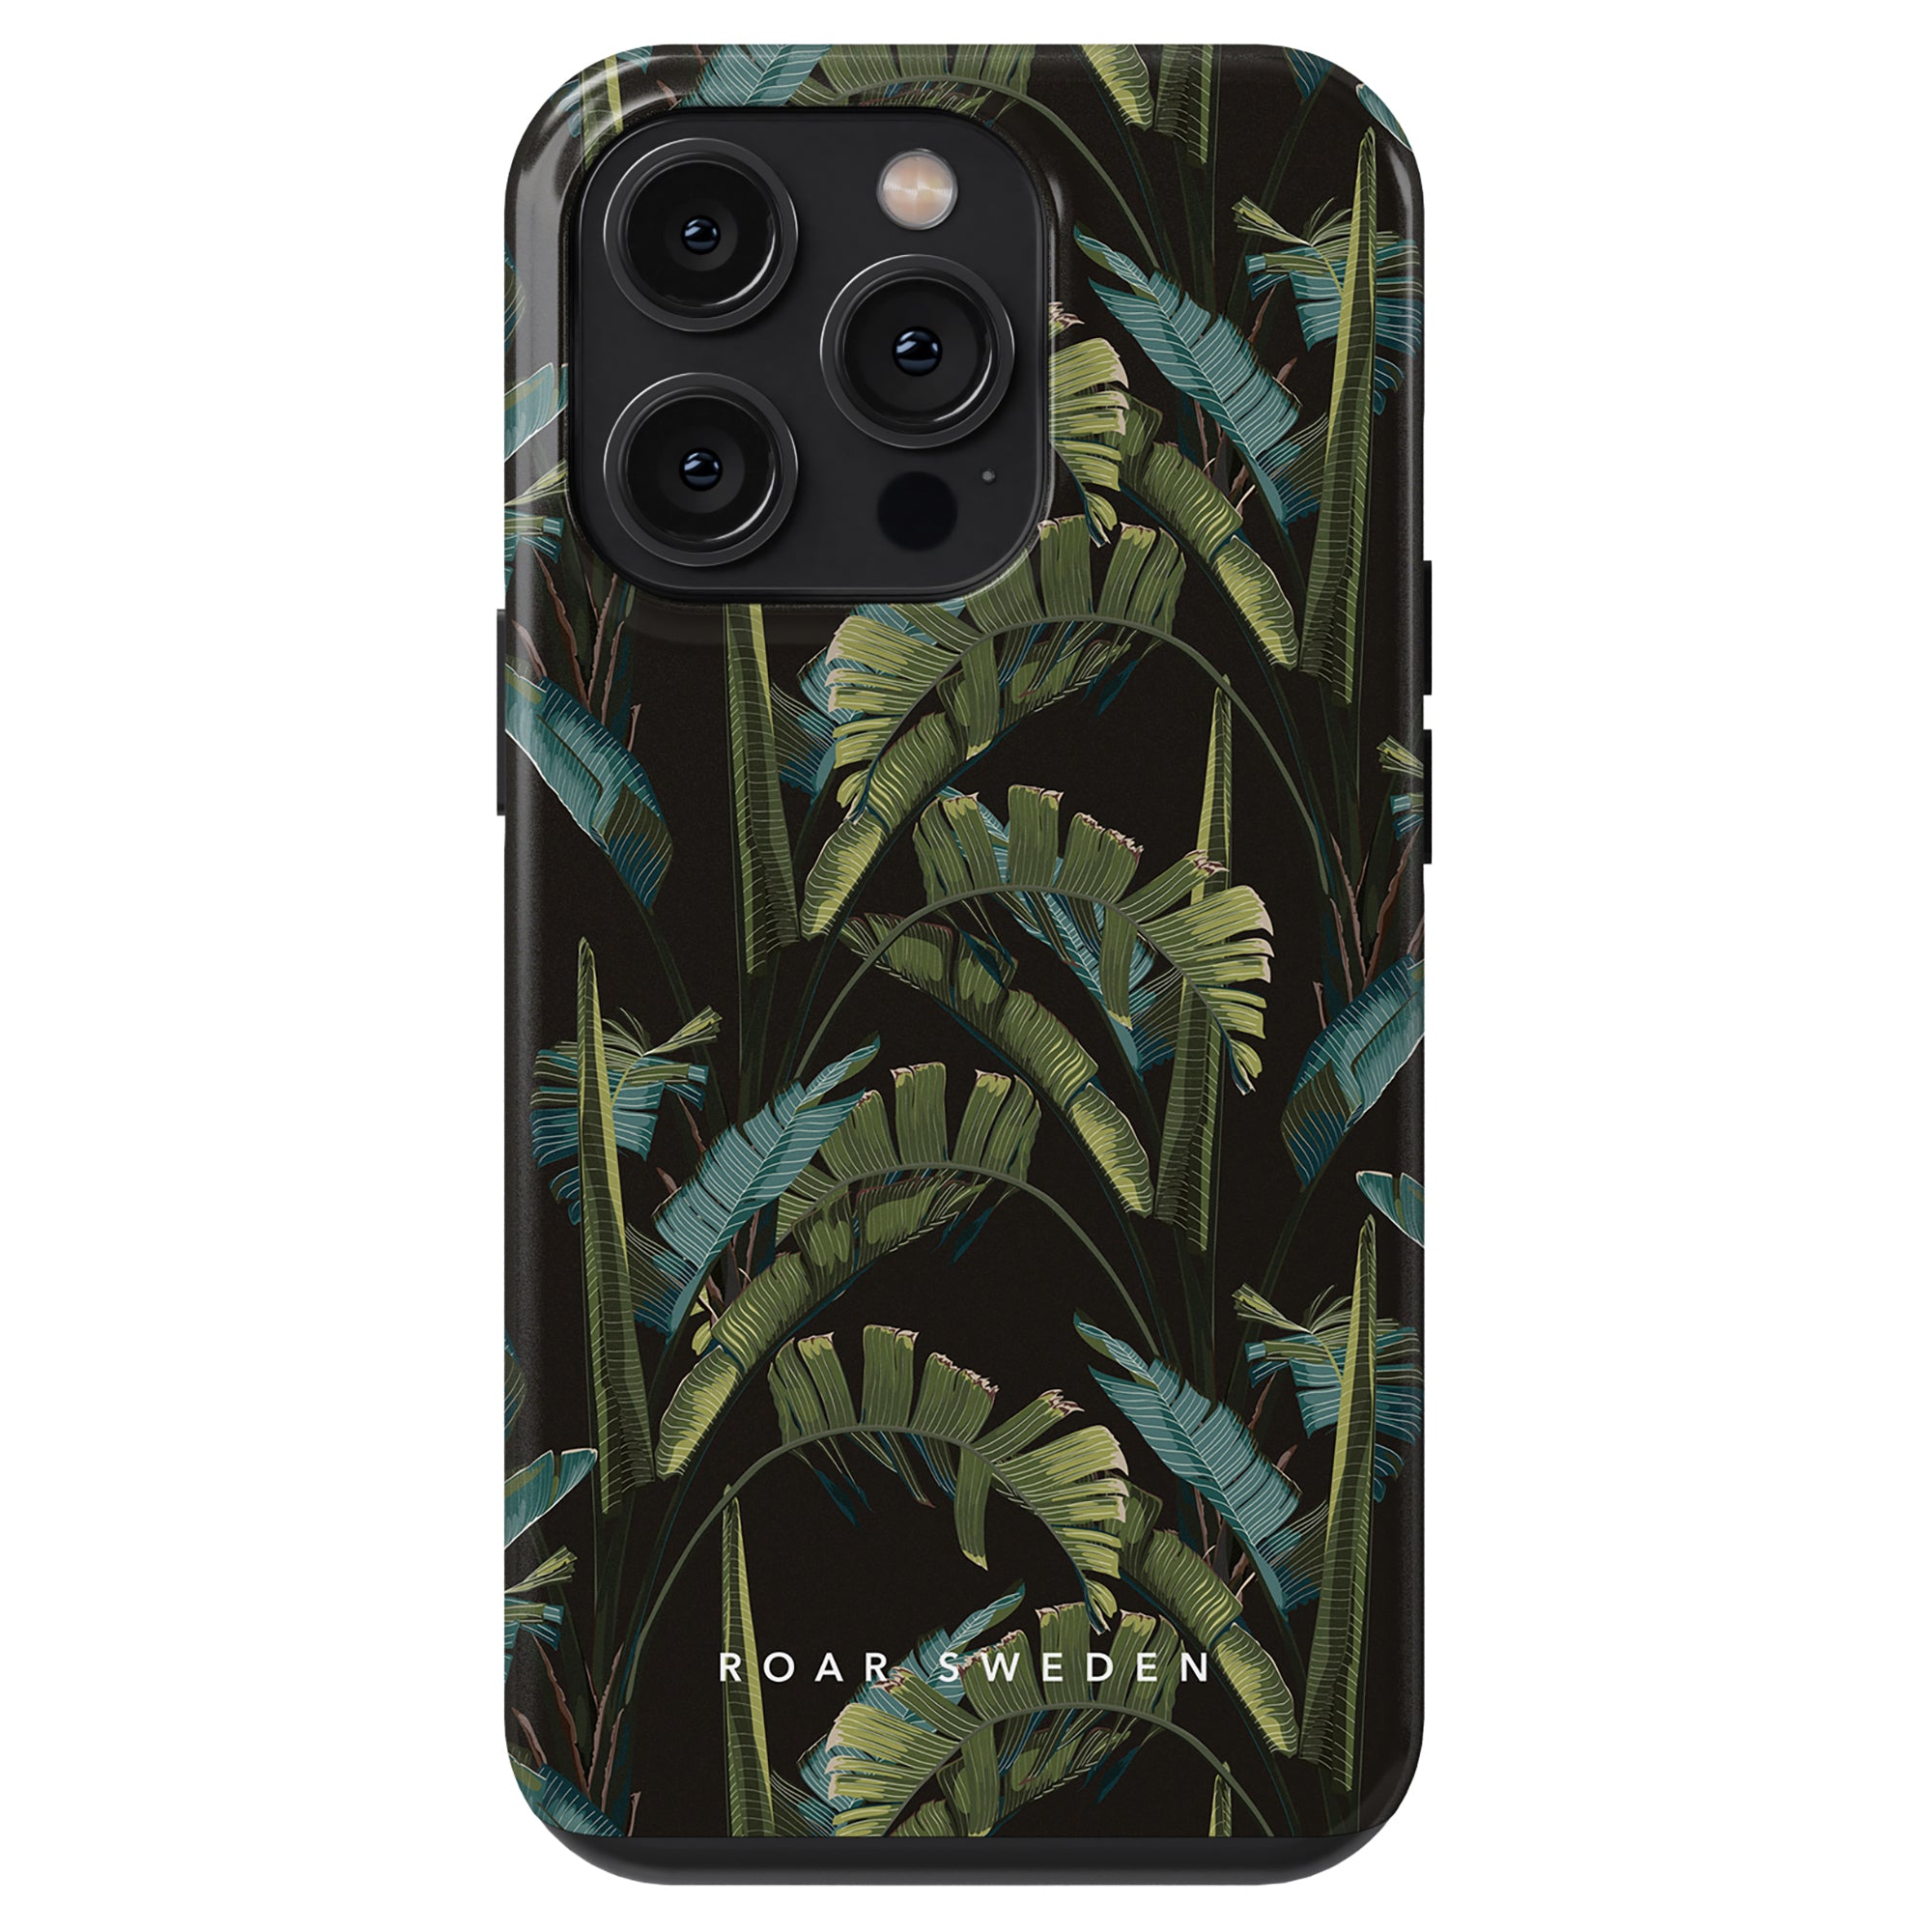 A Mystic Jungle tough case with four cameras.
Product Name: A Mystic Jungle - Tough Case with Four Cameras